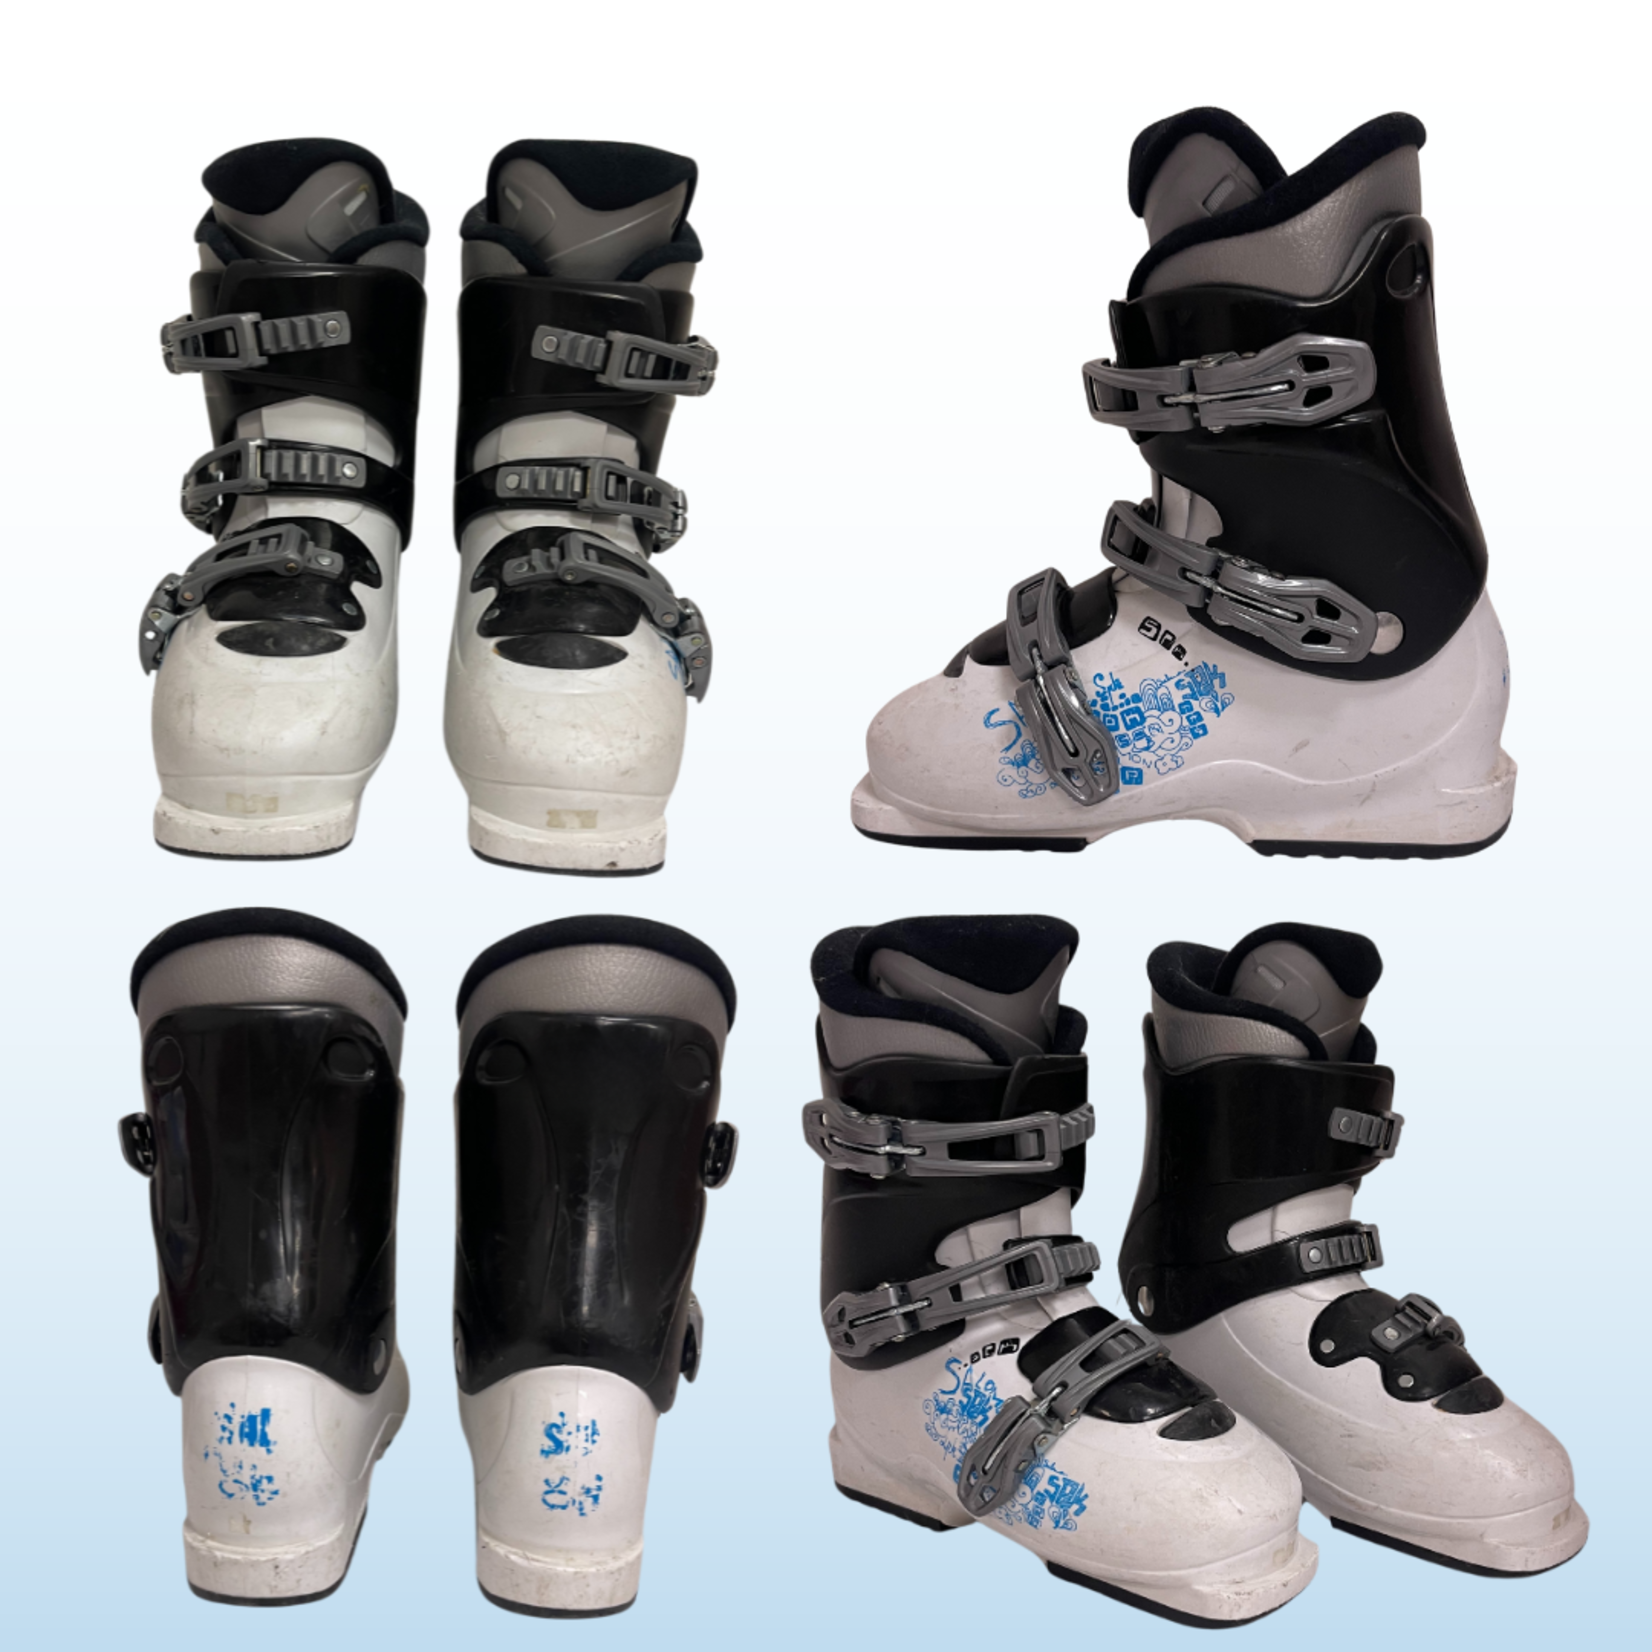 Salomon Salomon SPK Kids Ski Boots, Size 23.5